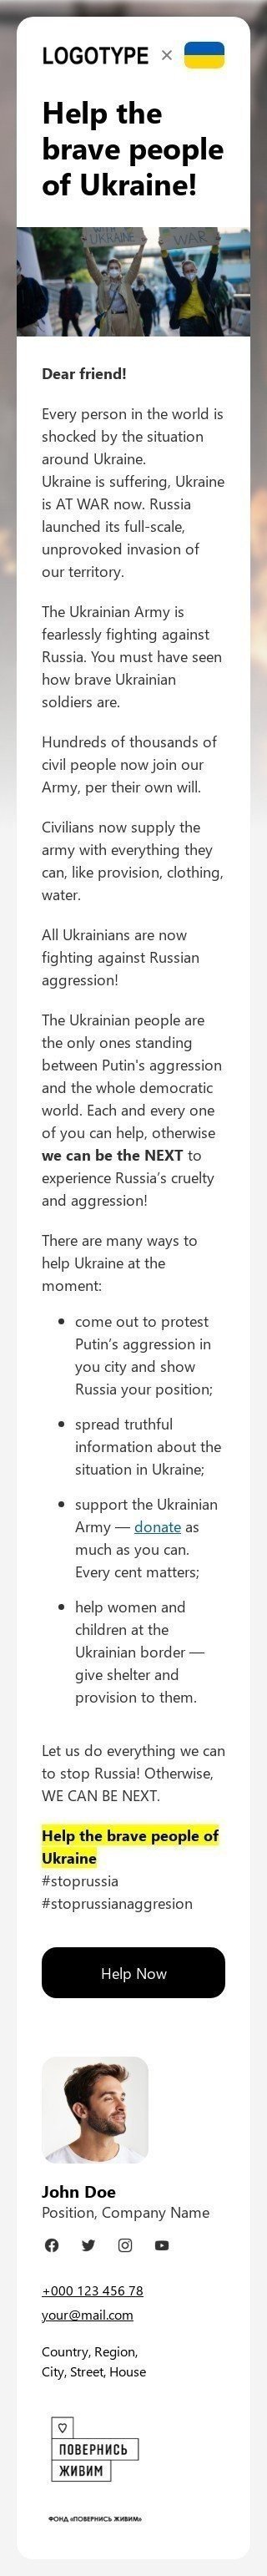 The "Spread the word to help Ukraine" email template Visualizzazione mobile